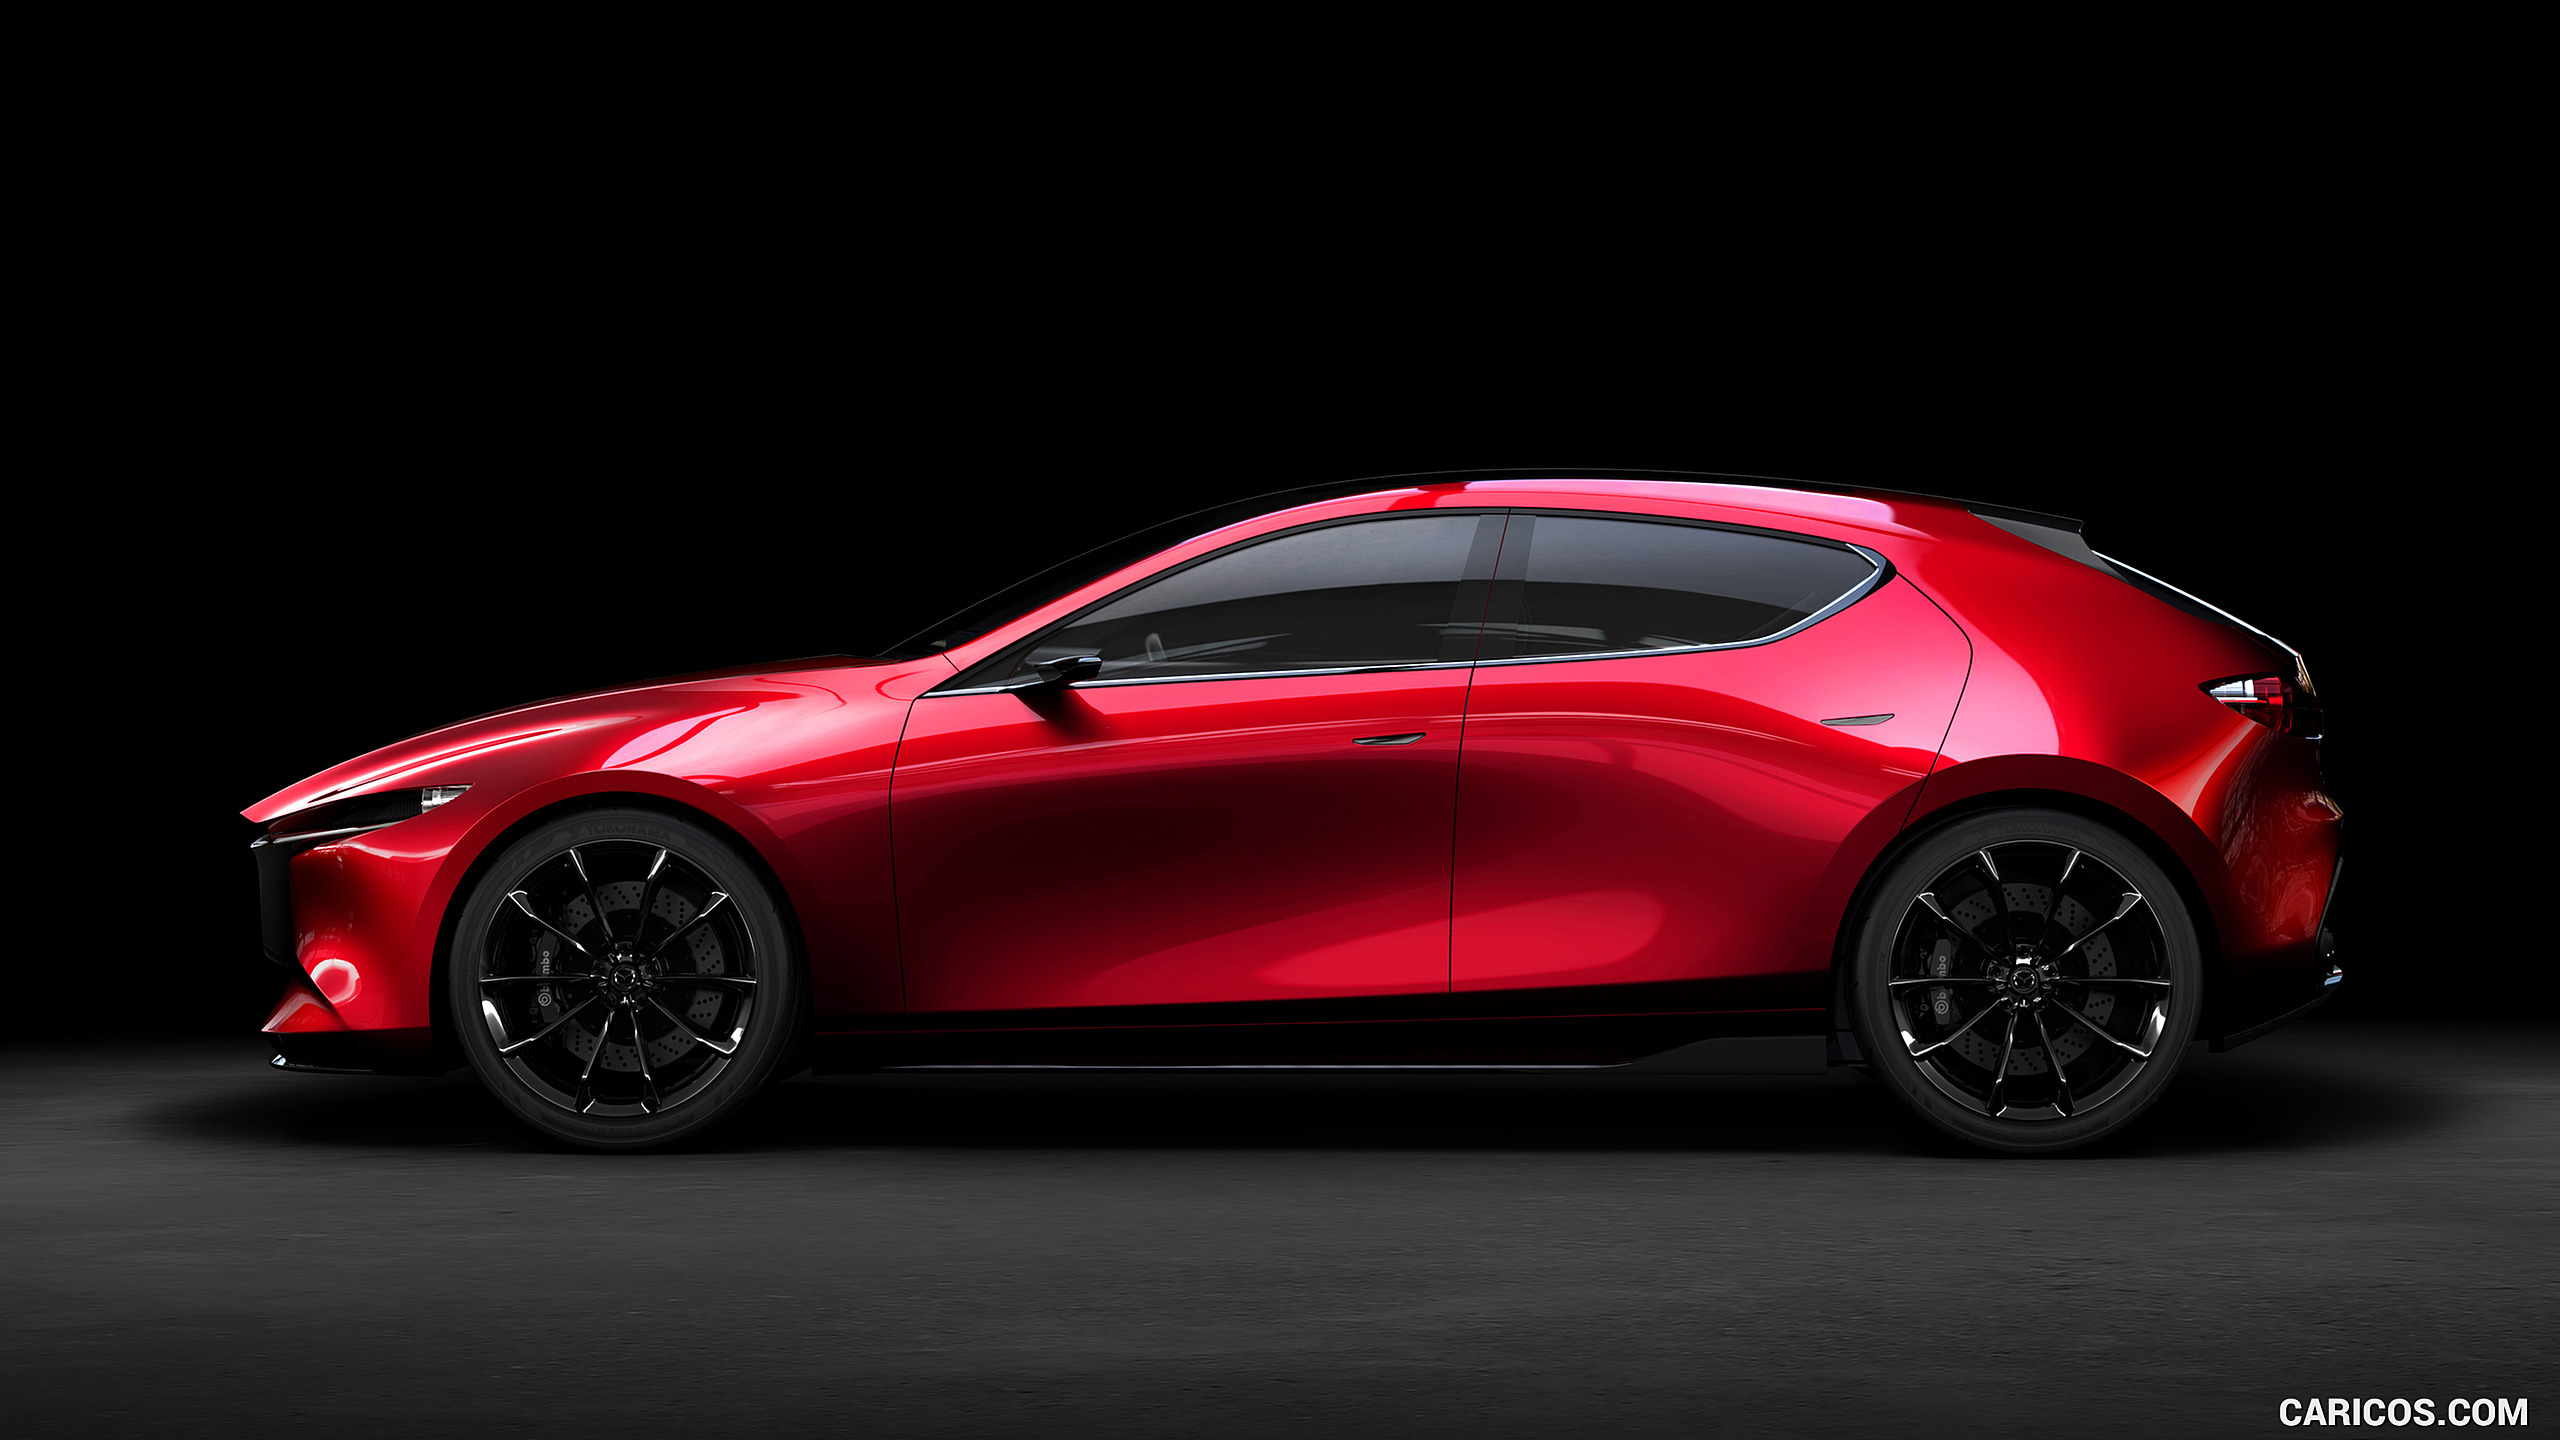 2017 Mazda KAI Concept - Side, #6 of 13